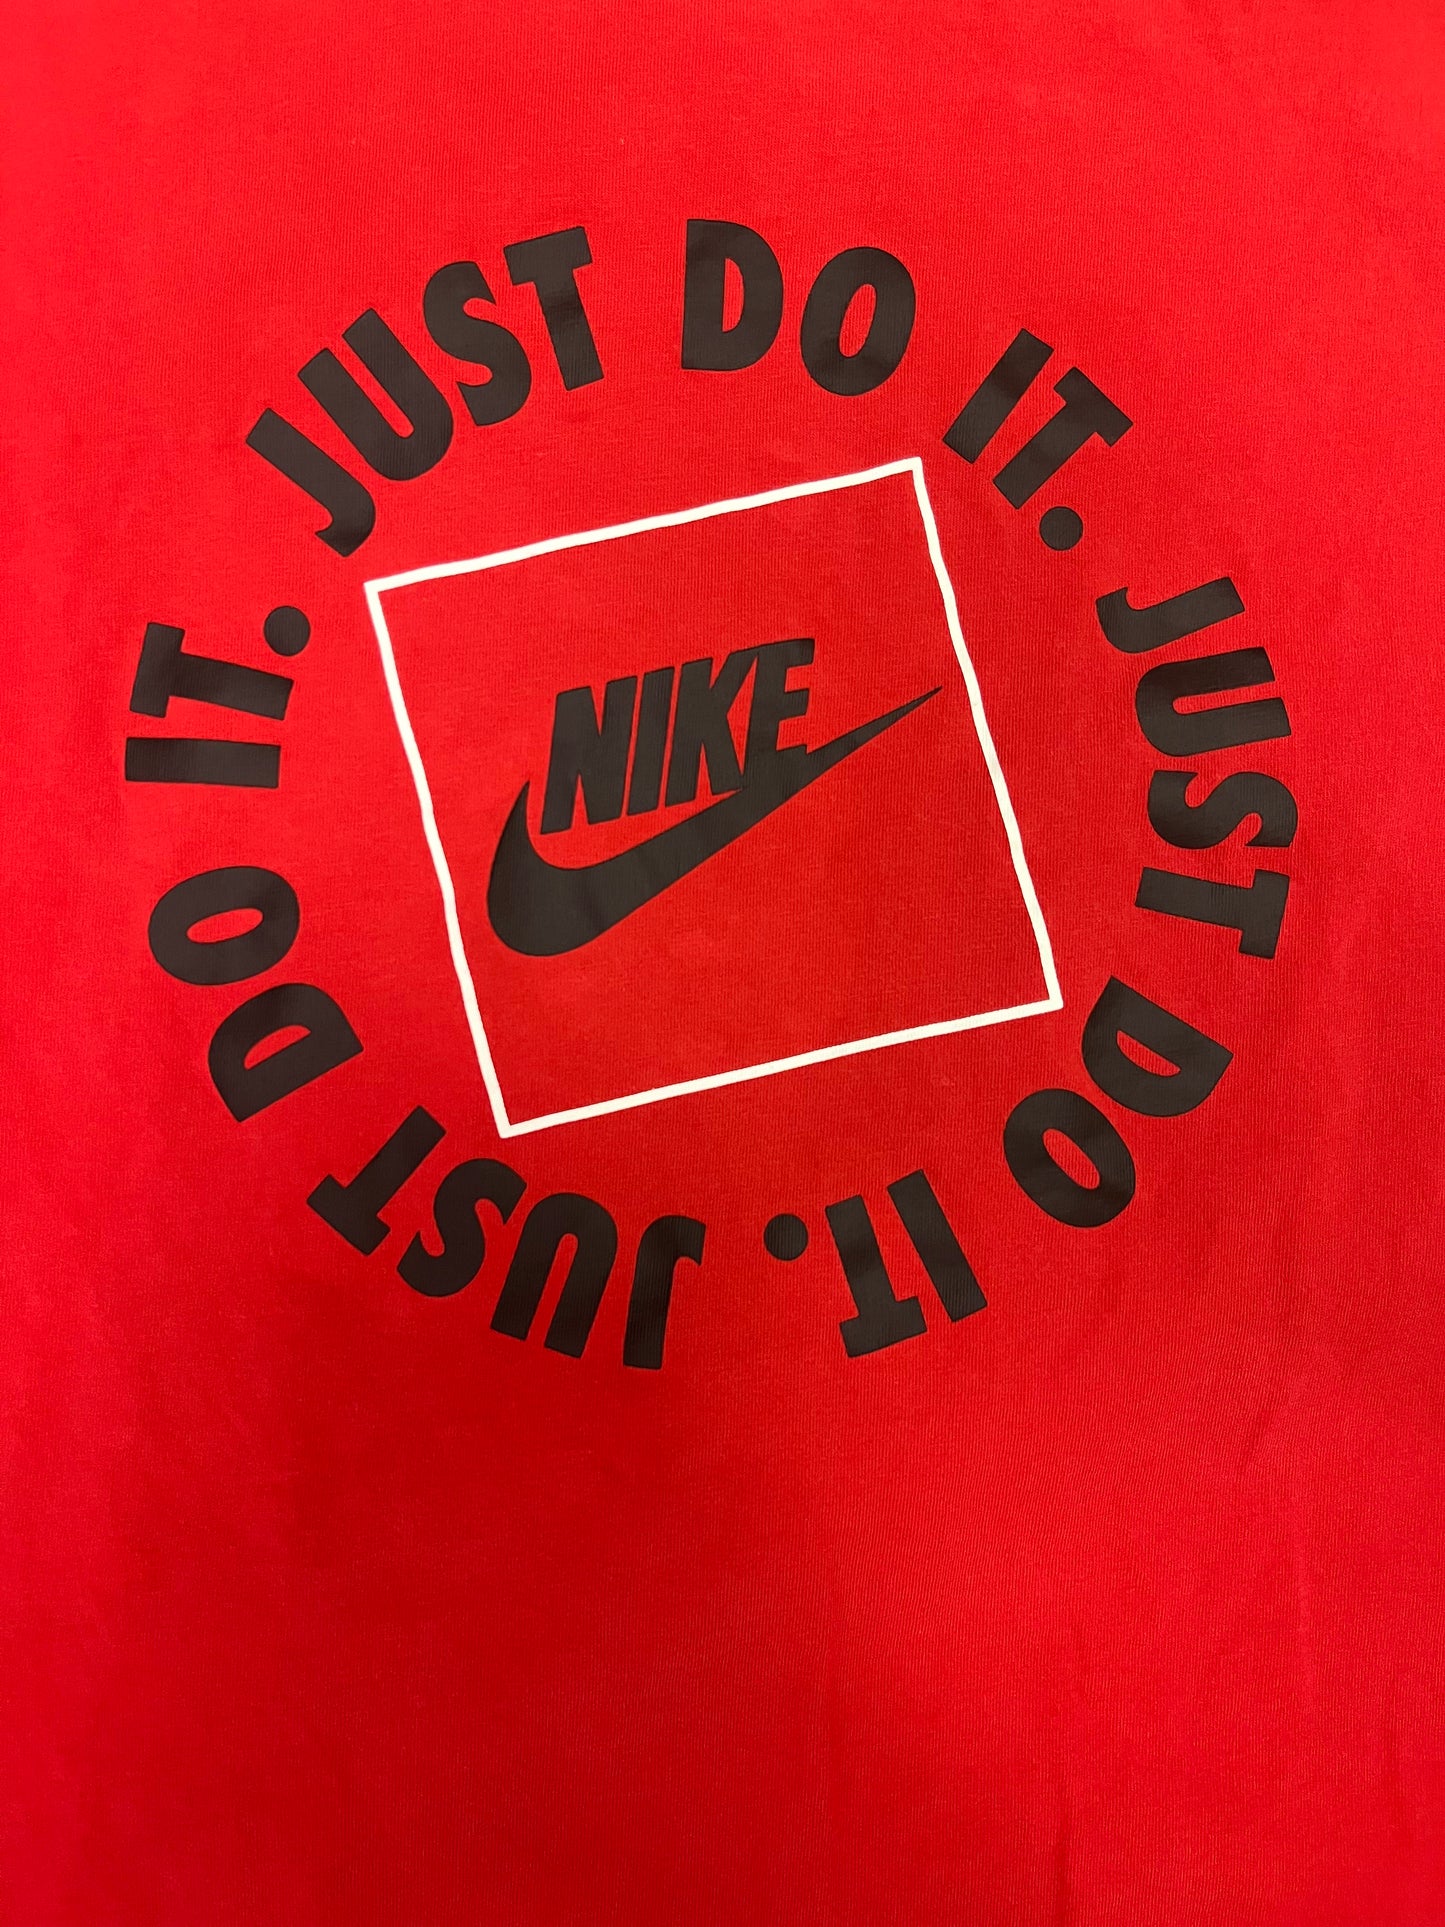 Nike Just Do It Tee